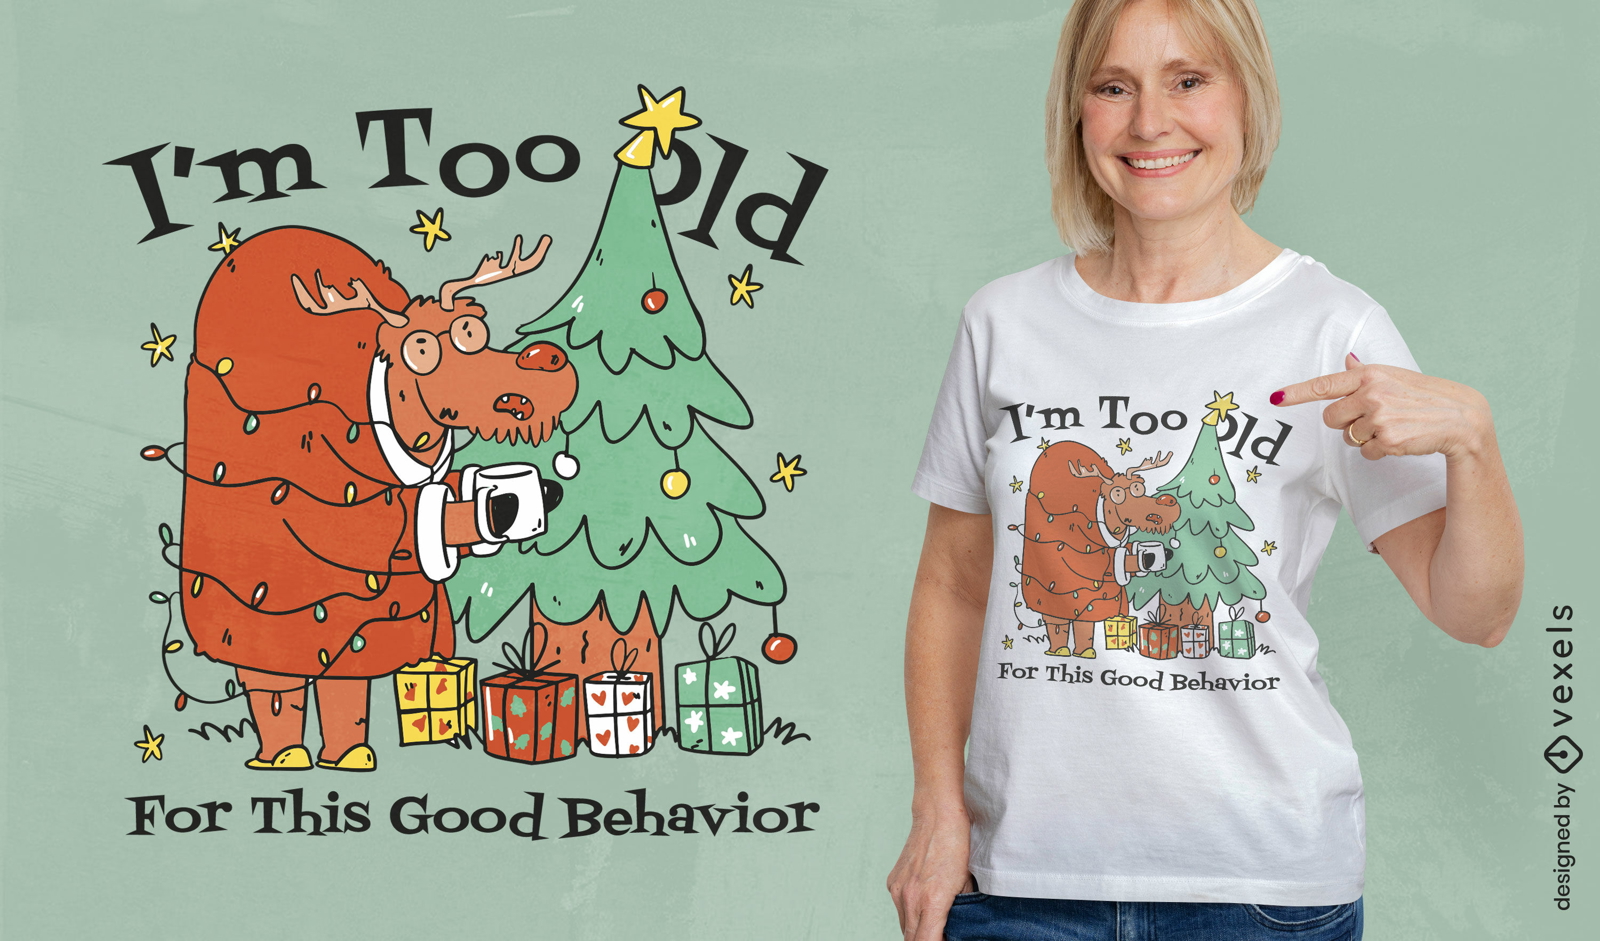 Funny old Christmas reindeer t-shirt design